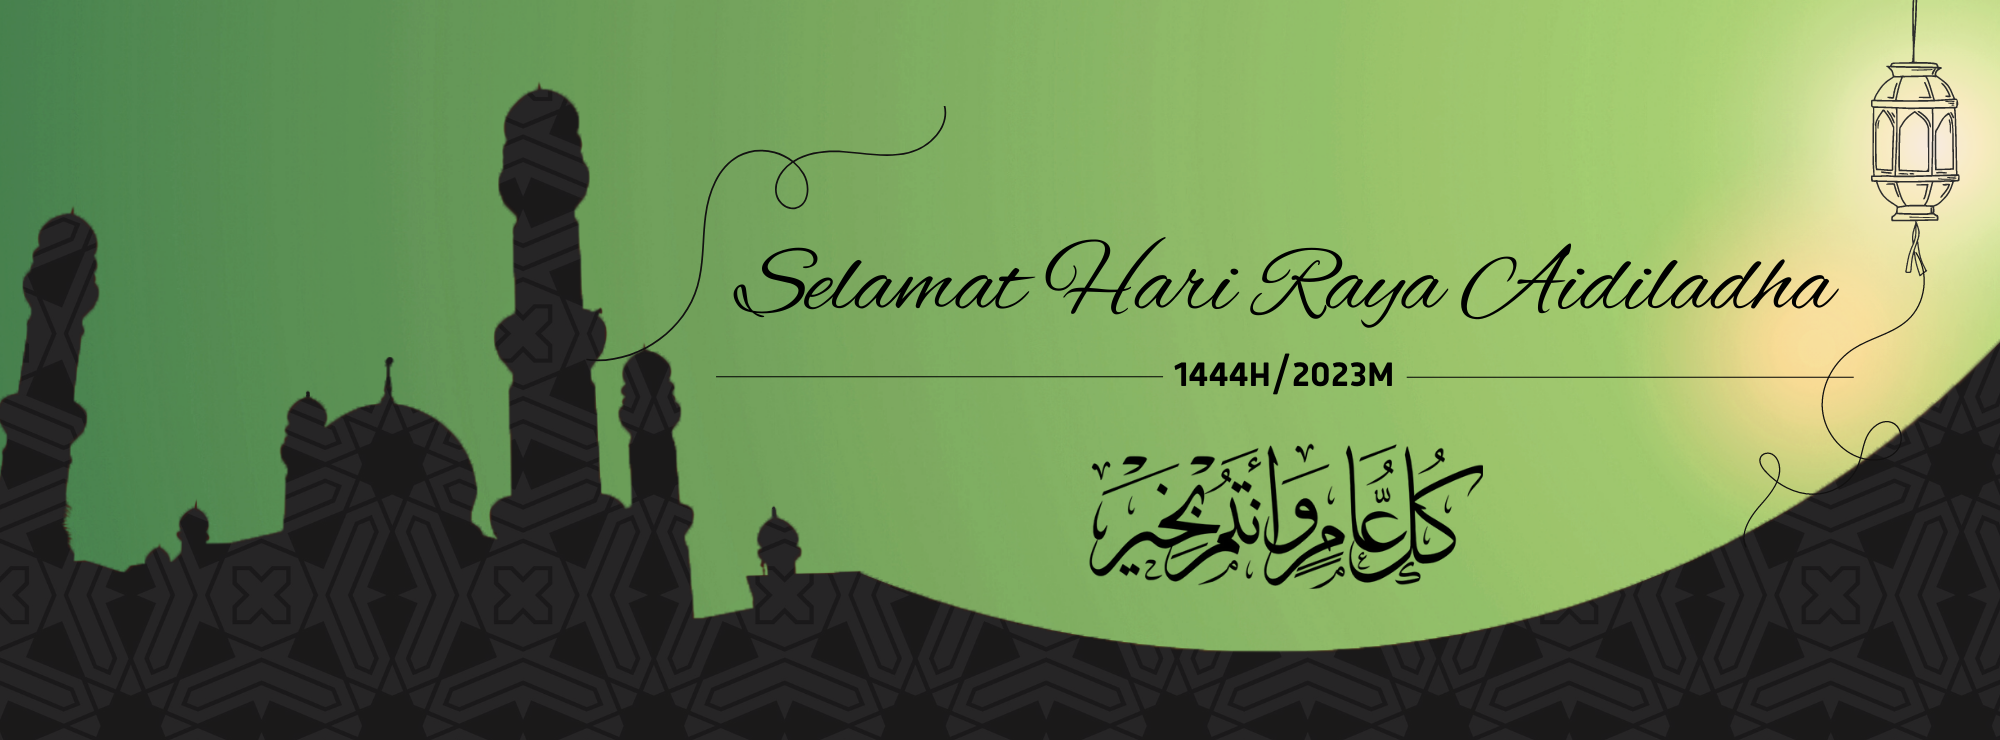 Hari Raya Aidil Adha Website Banners 2023.png